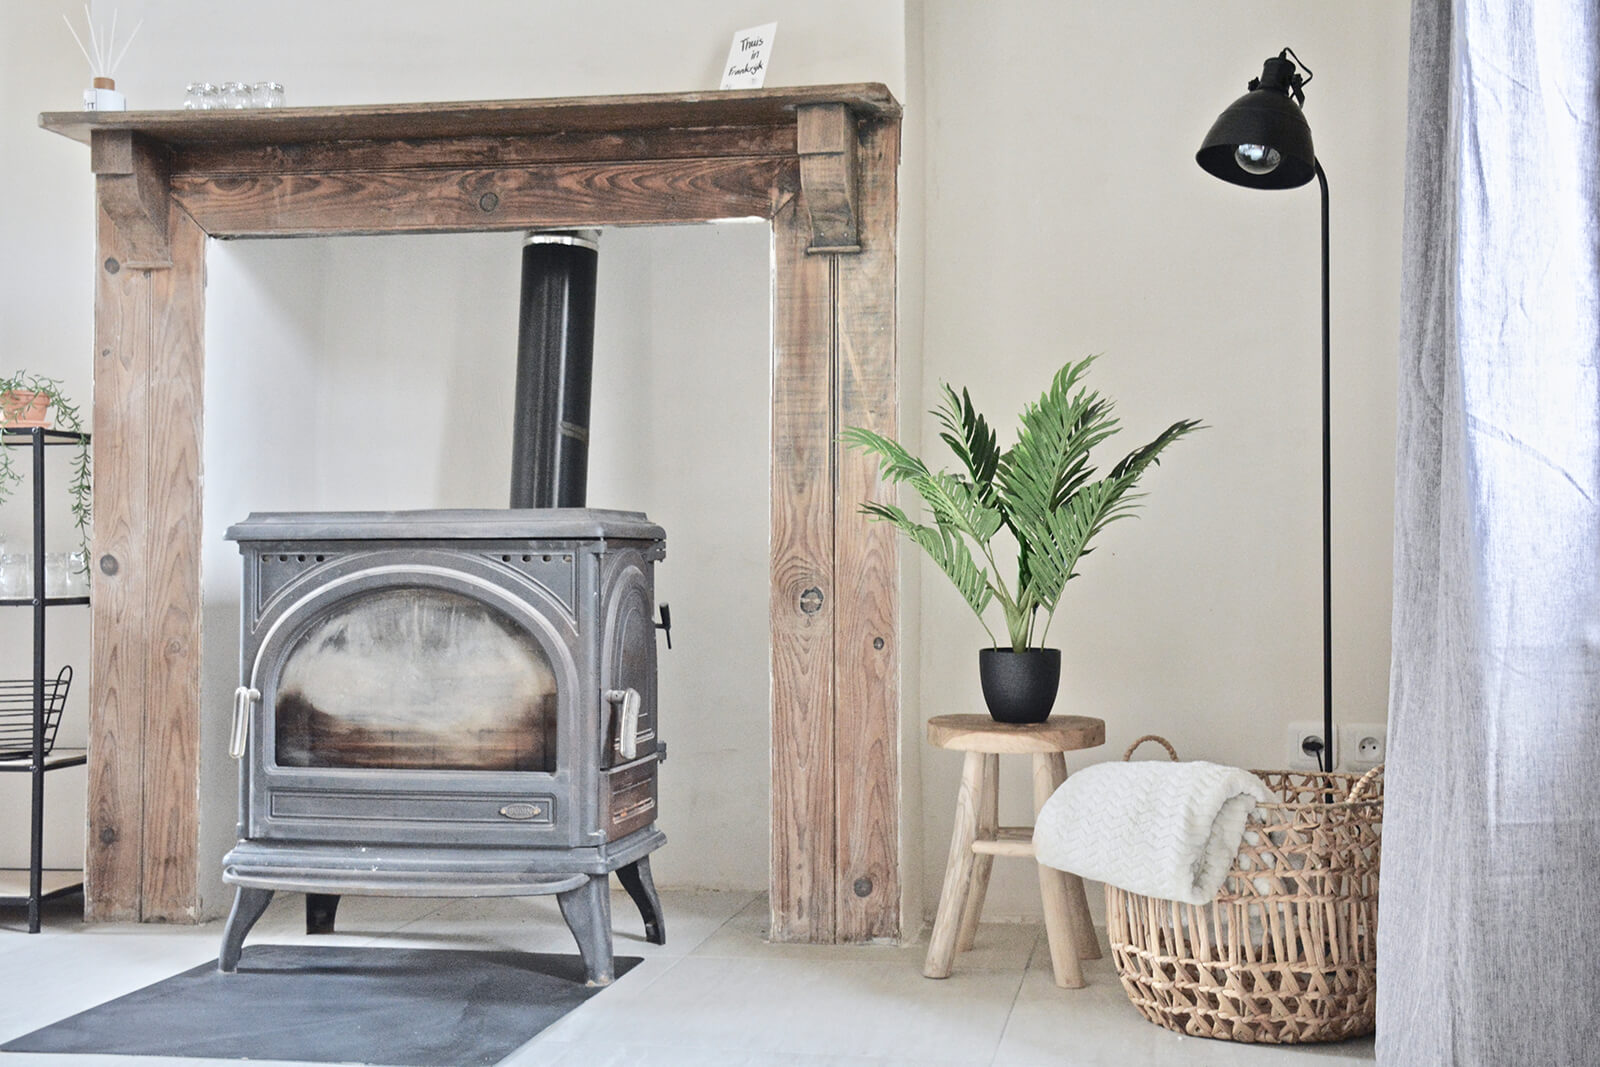 Living room Holiday home LOTT Saint Germain les Belles wood stove atmosphere maker